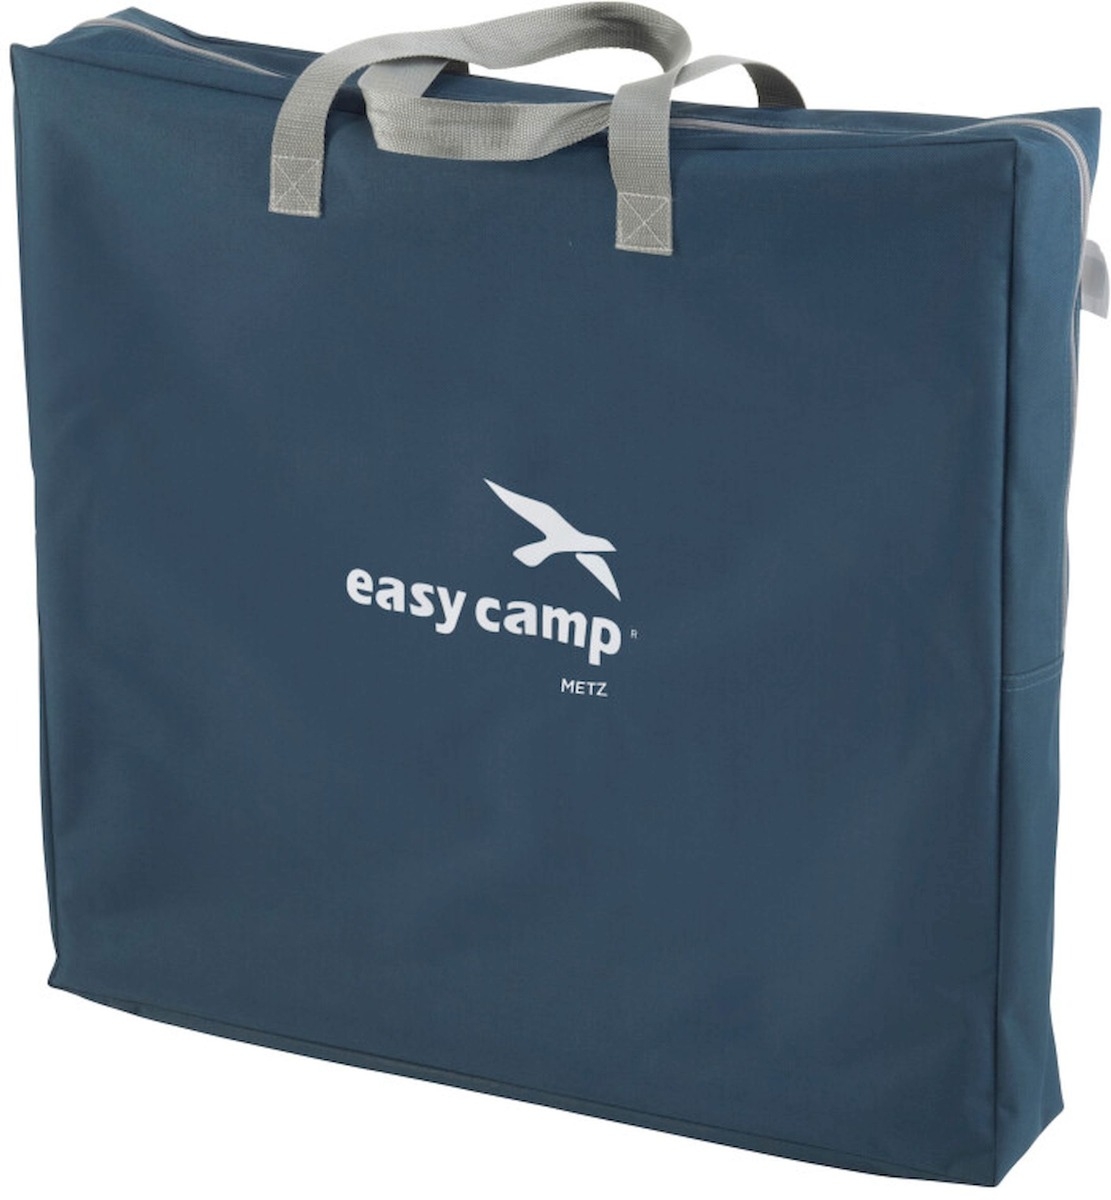 Easy Camp Metz Campingschrank 3 Etagen mit Blatt - Blau